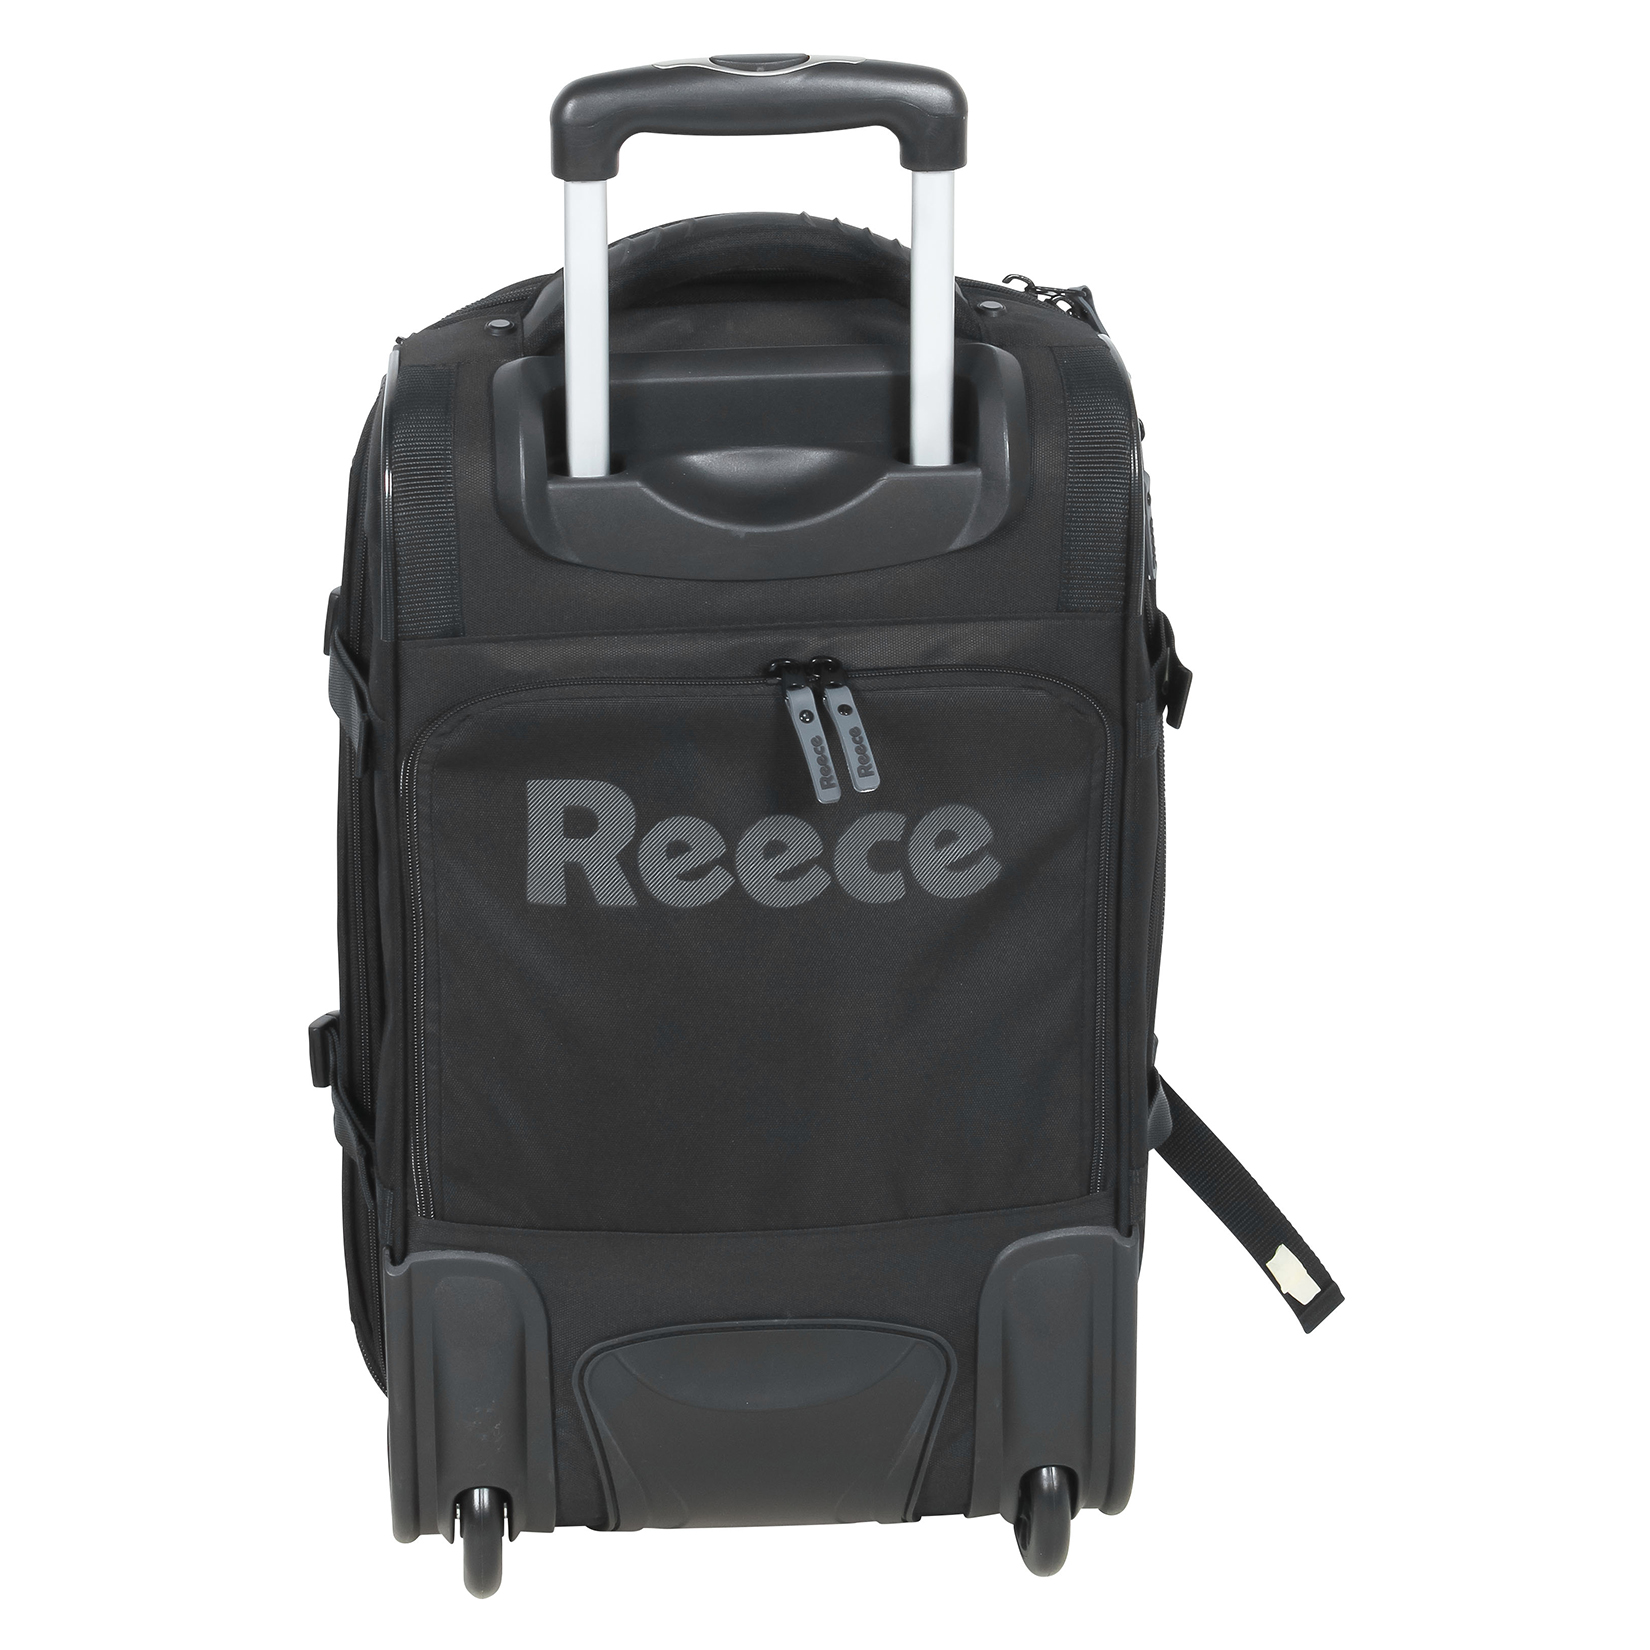 Reece Trolley Bag Medium